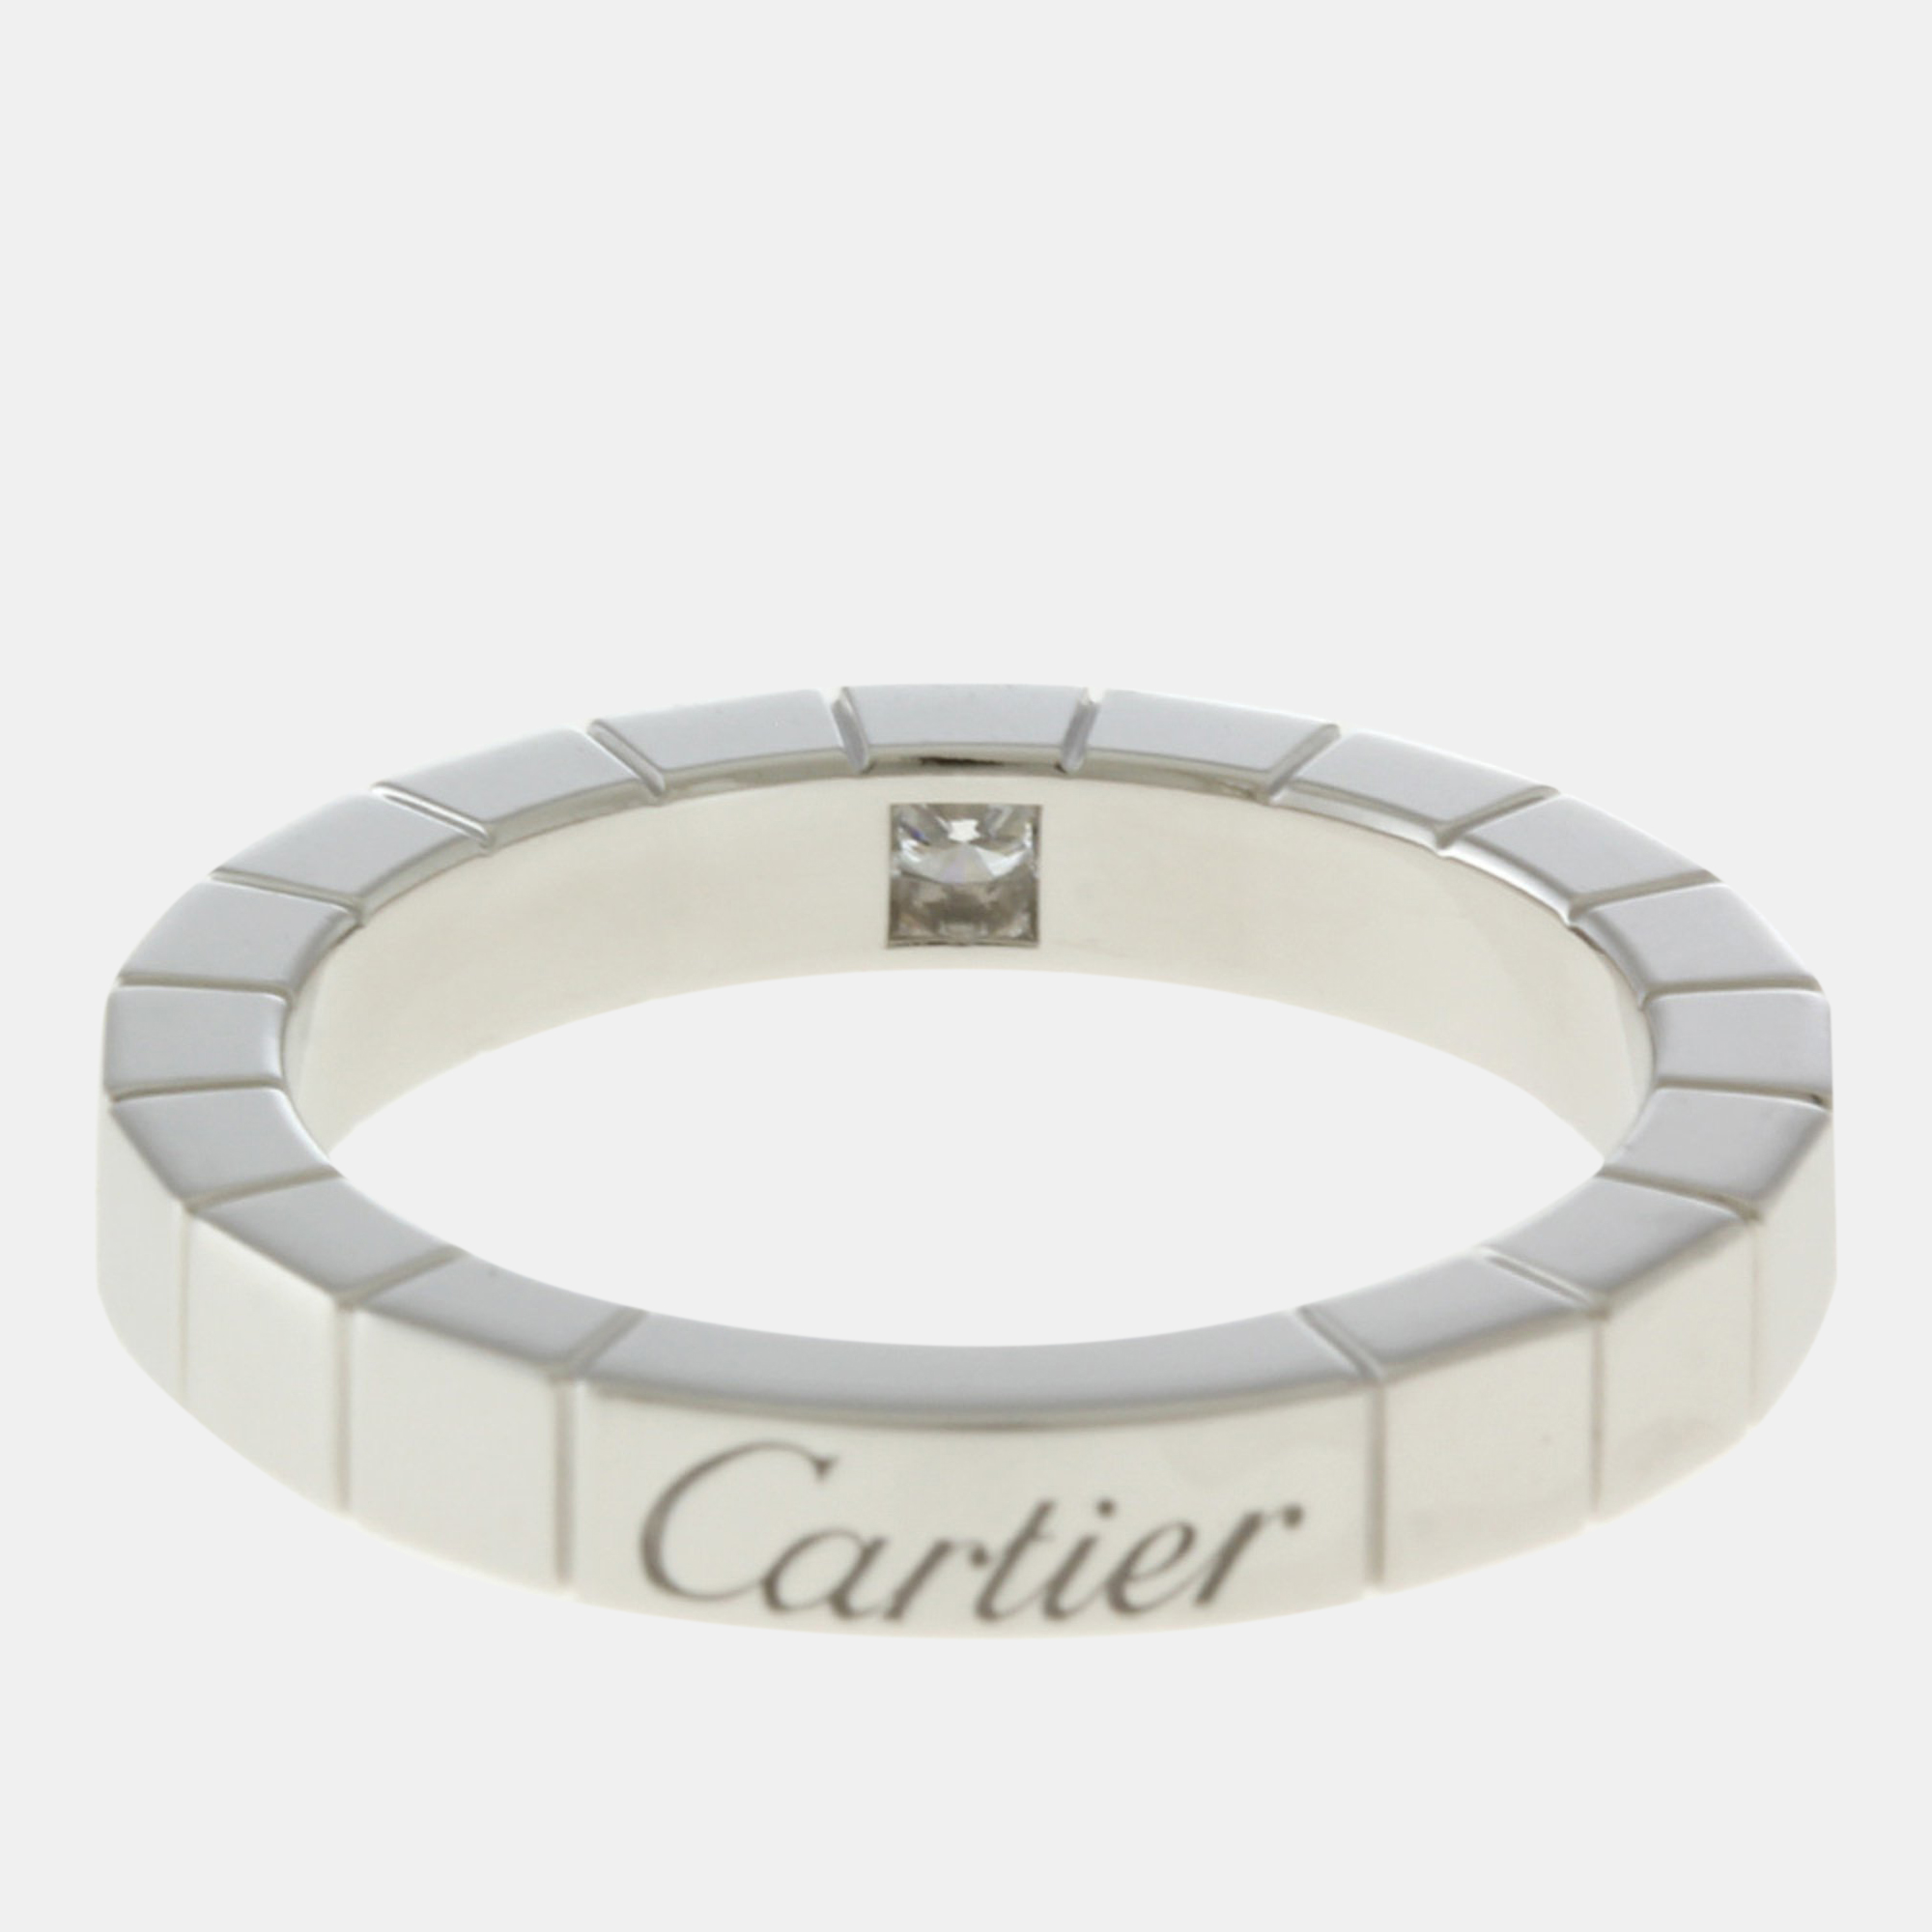 Cartier 18K White Gold And Diamond Lanieres Band Ring EU 50